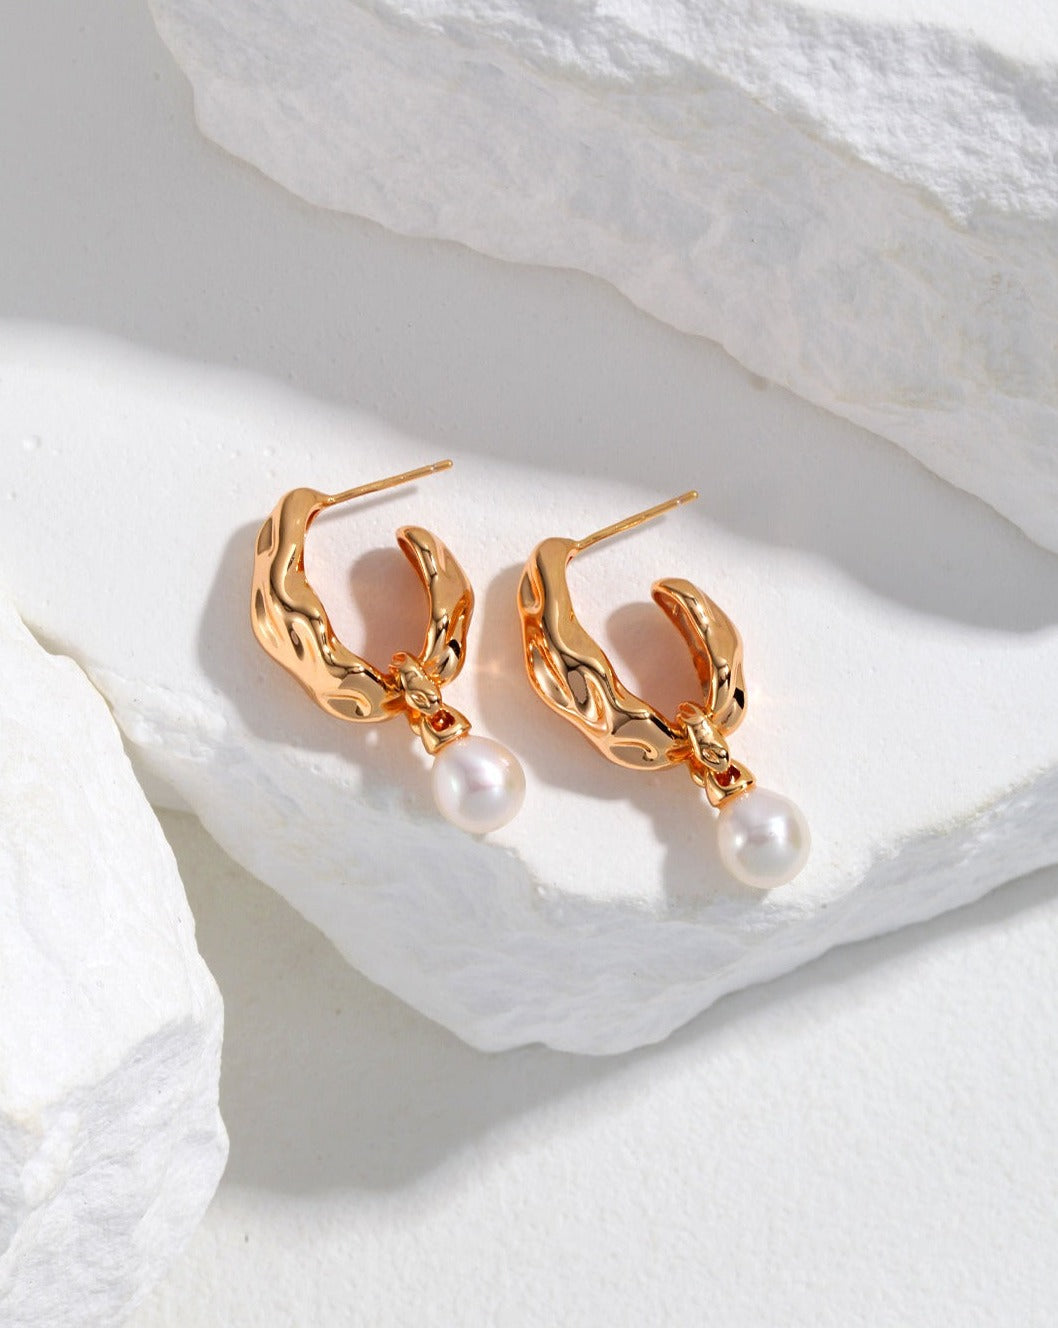 fashion-jewelry-minimalist-jewelry-design-jewelry-statement-necklace-pearl-earring-bracelet-rings-gold-coated-silver-bijoux-retro-gold-jewelry-set-scarf-shape-pearl-earrings